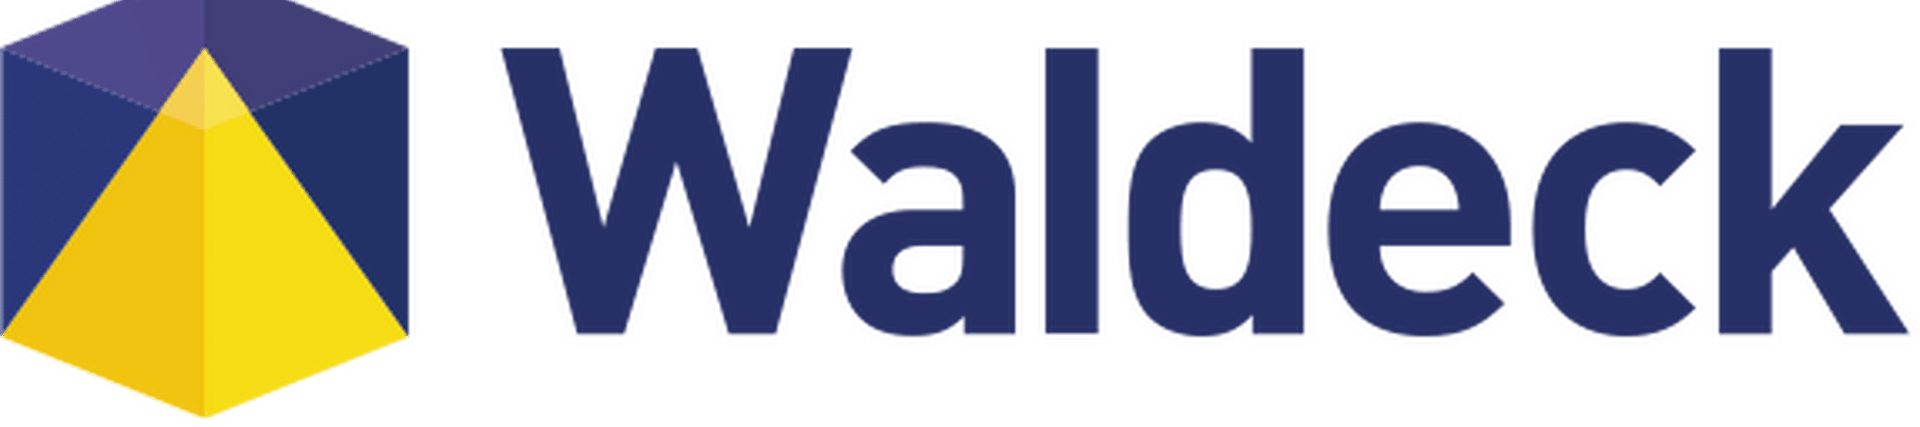 Waldeck logo